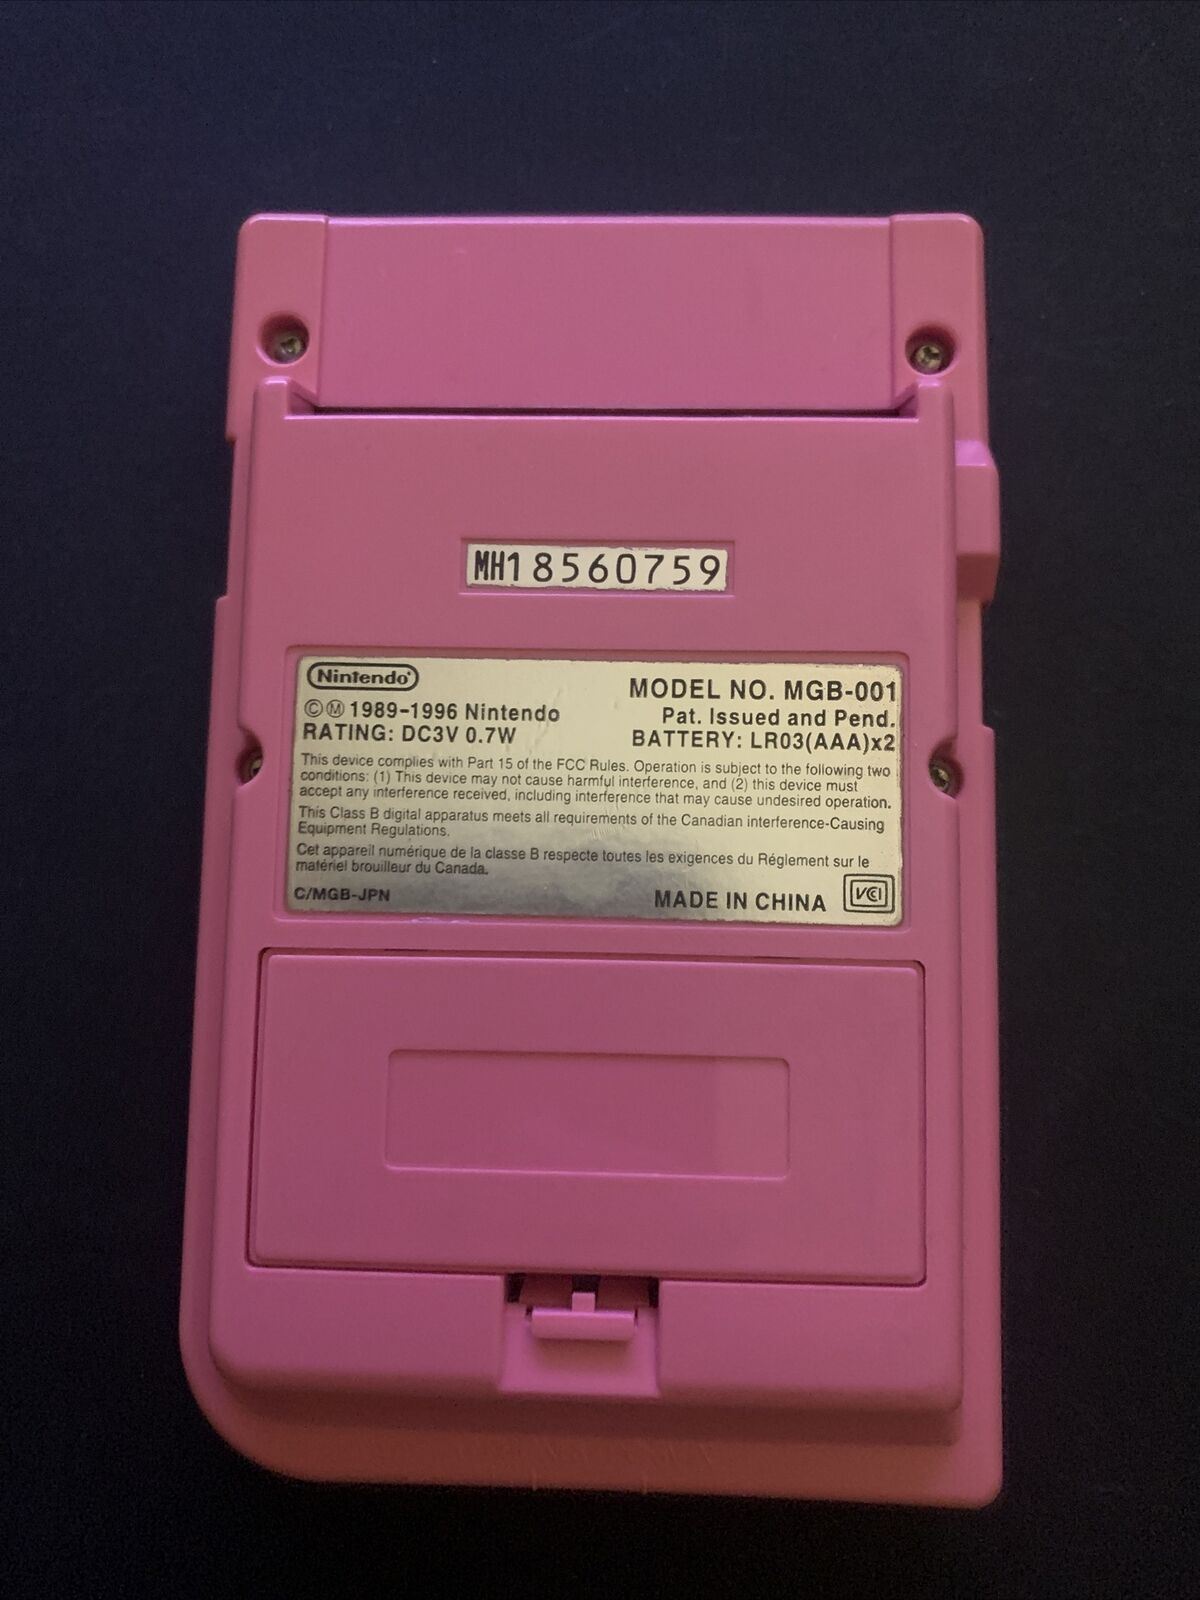 Nintendo Game Boy Pocket Pink Handheld Console - Pink Limited Edition